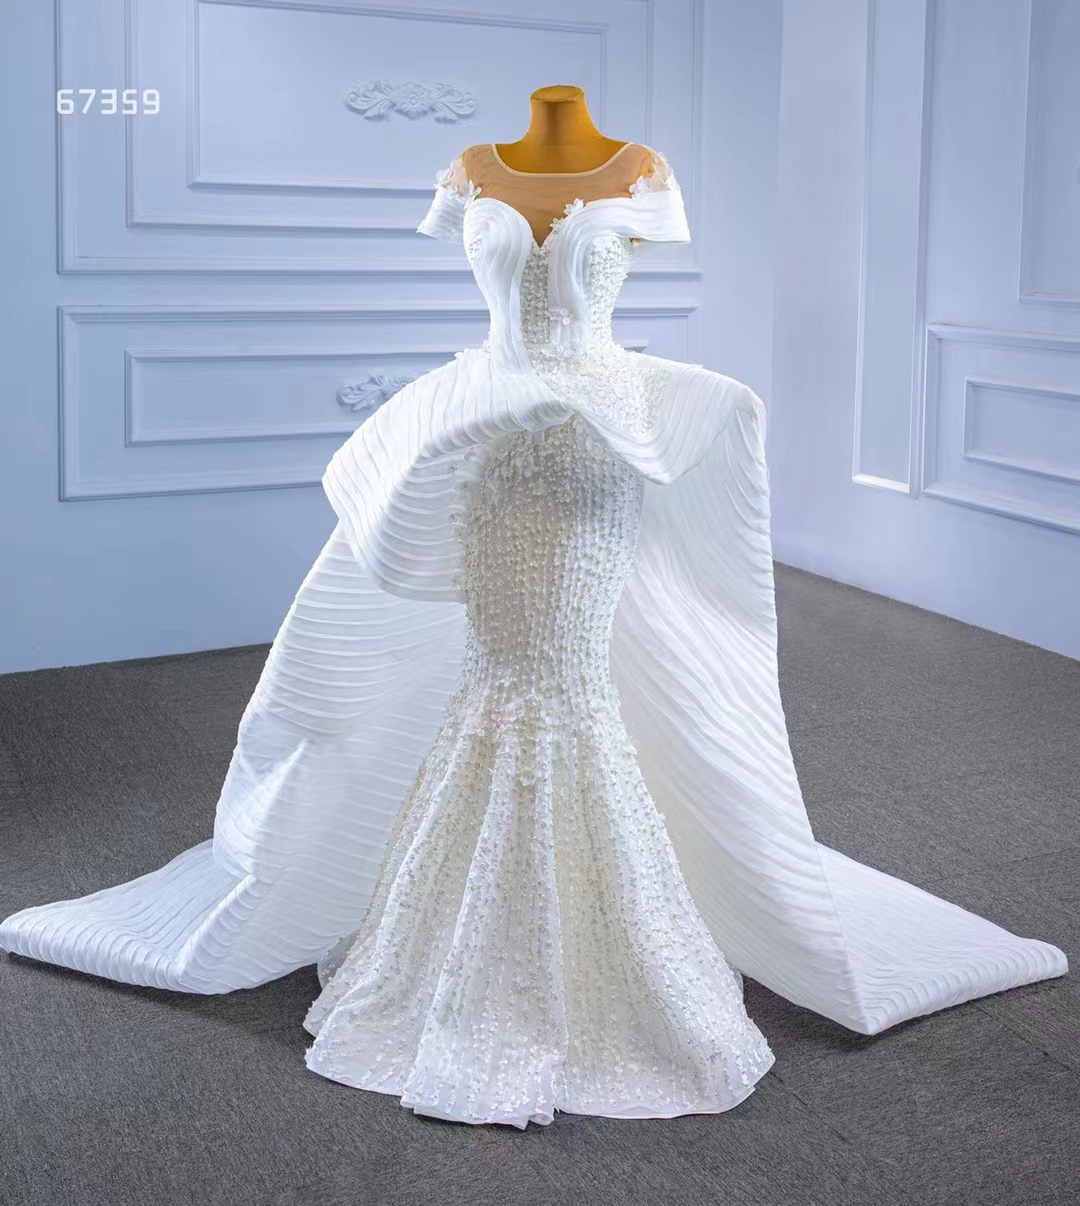 Sweetheart Wedding Dress Trend Design Luxury Heavy Beaded Spets White SM67359